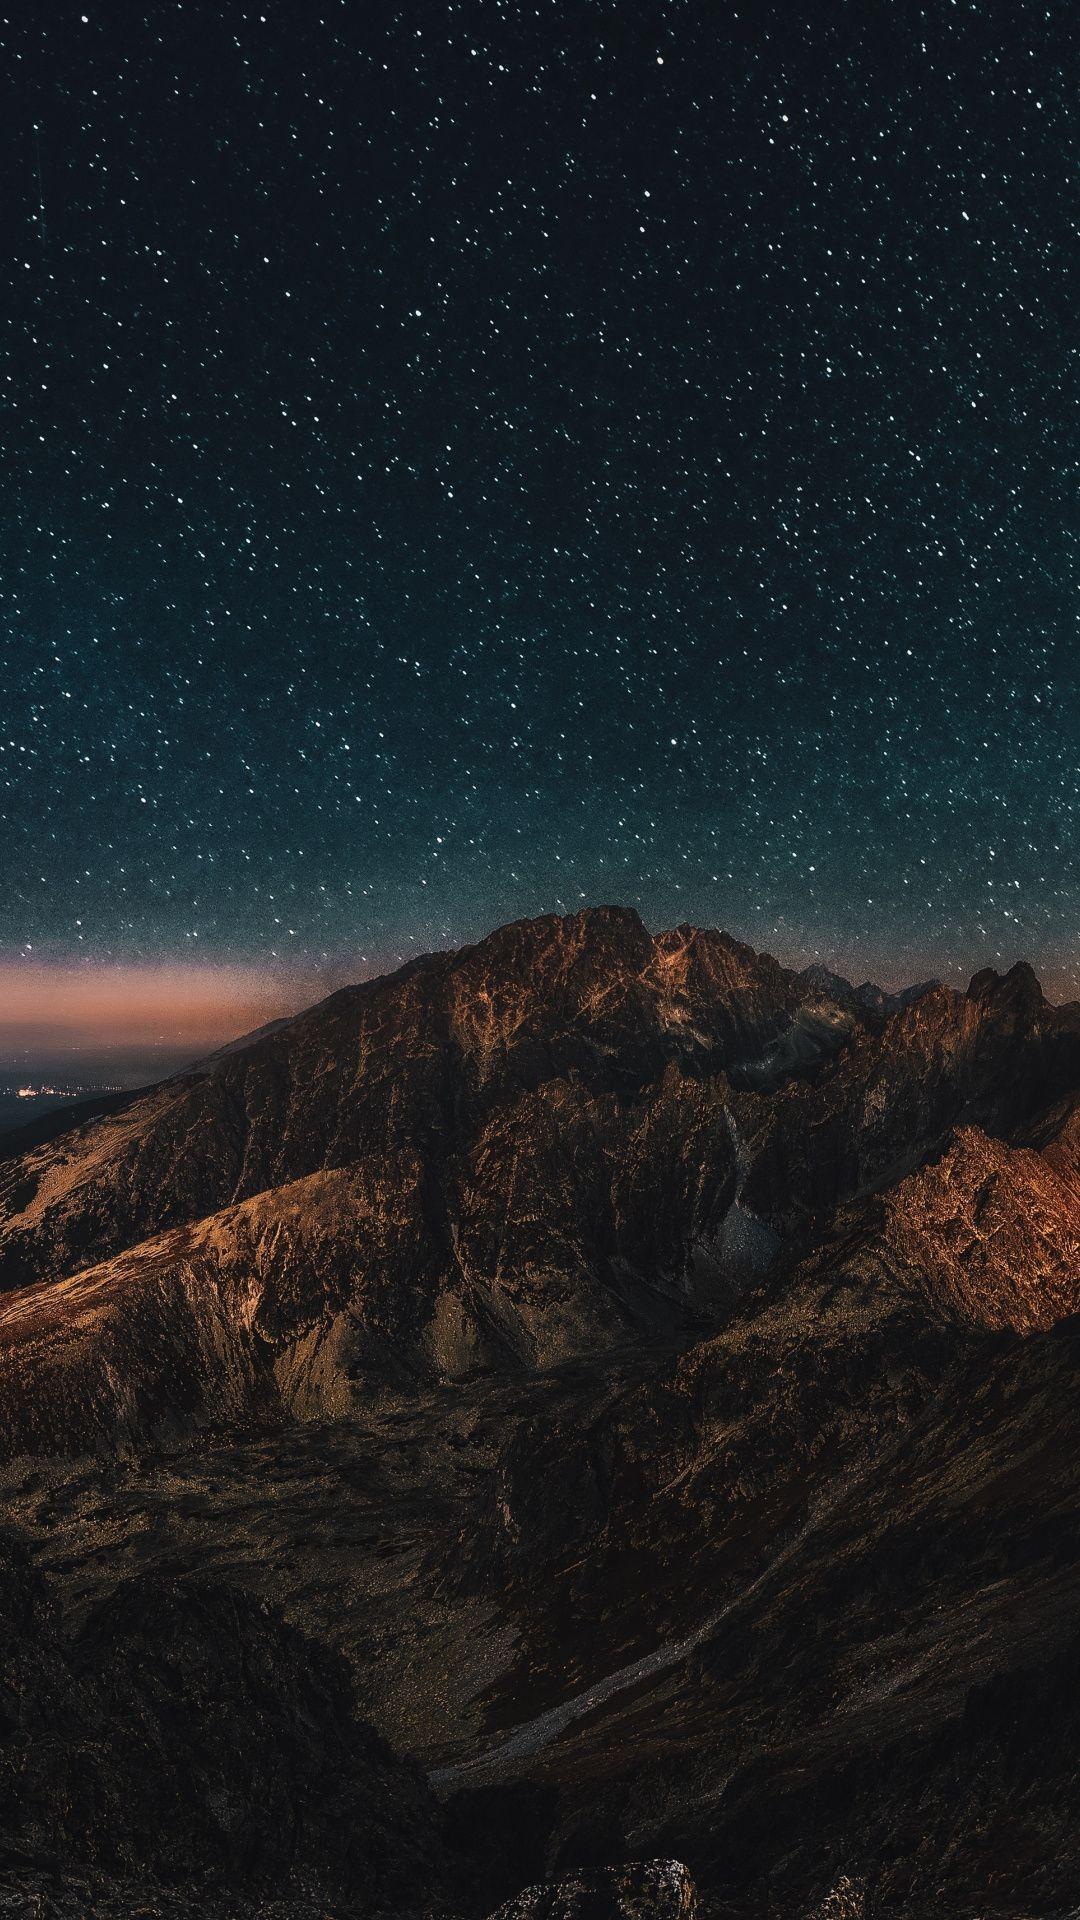 Night, Dolomites, mountains, Italy, 1080x1920 wallpaper. Galaxy wallpaper iphone, Night sky wallpaper, Background phone wallpaper